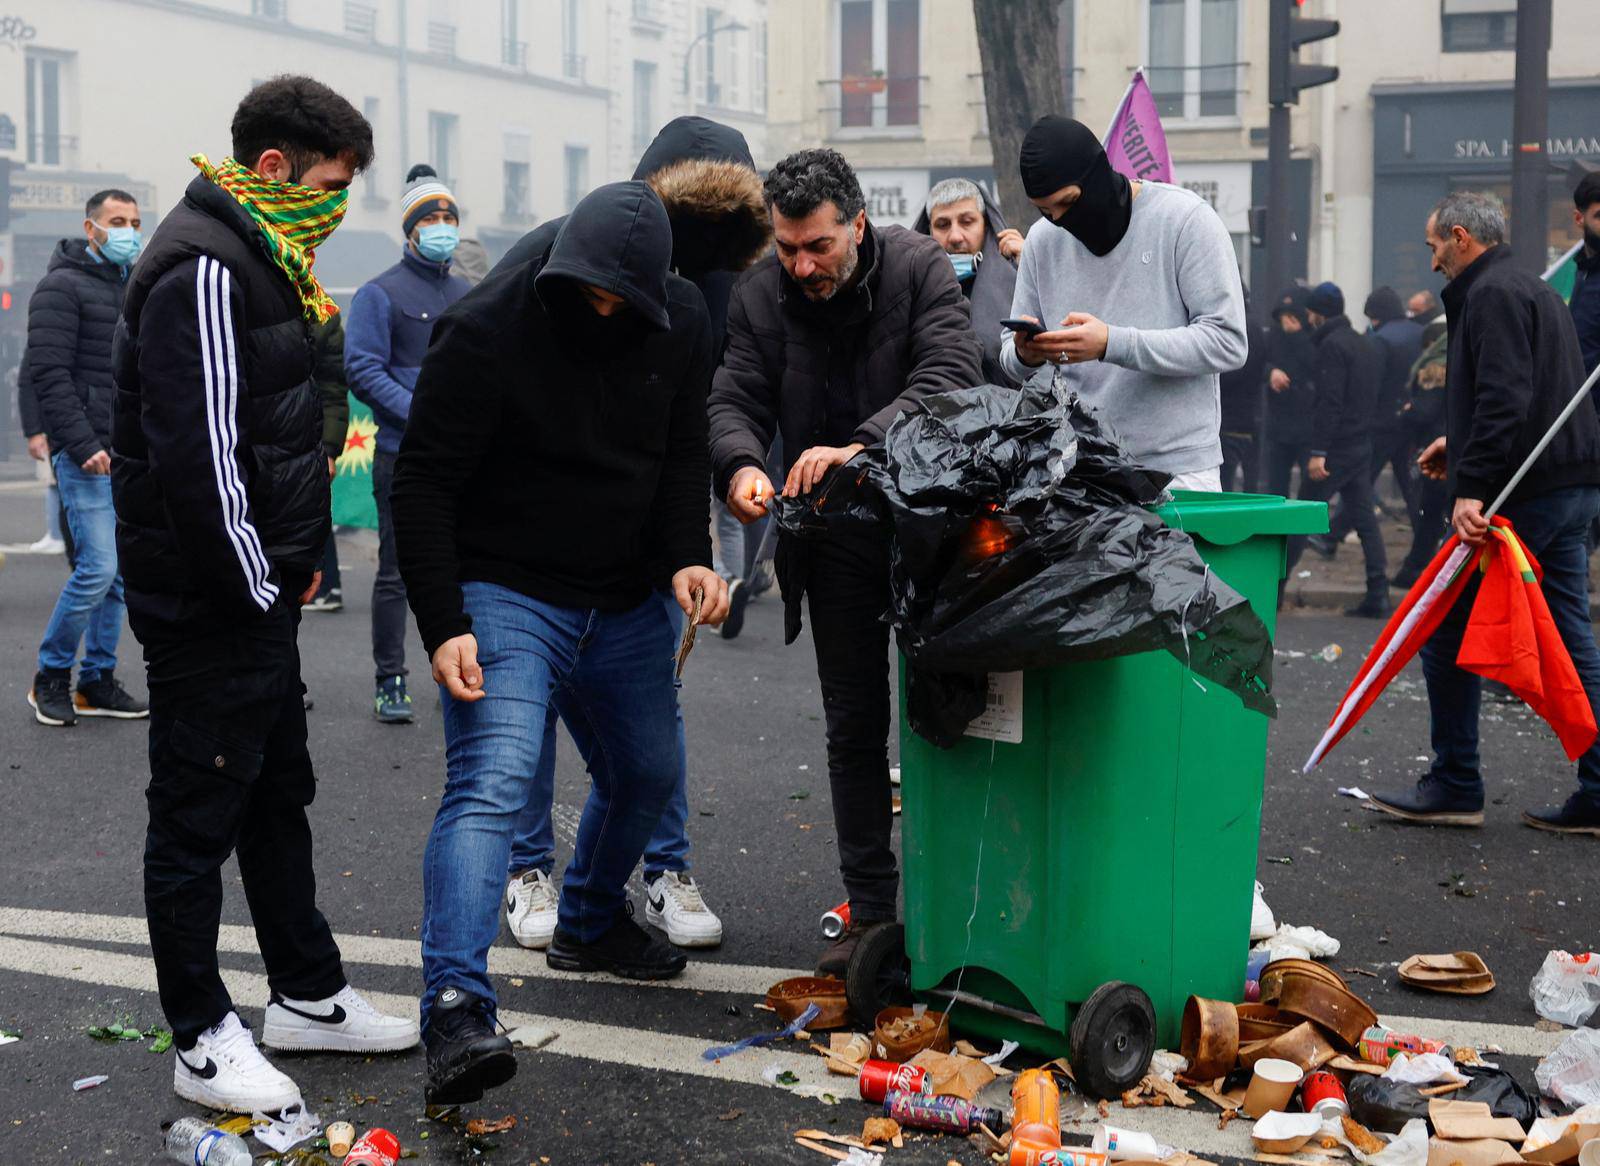 Members of the Kurdish community gather at the Place de la Republique square following the shooting, in Paris